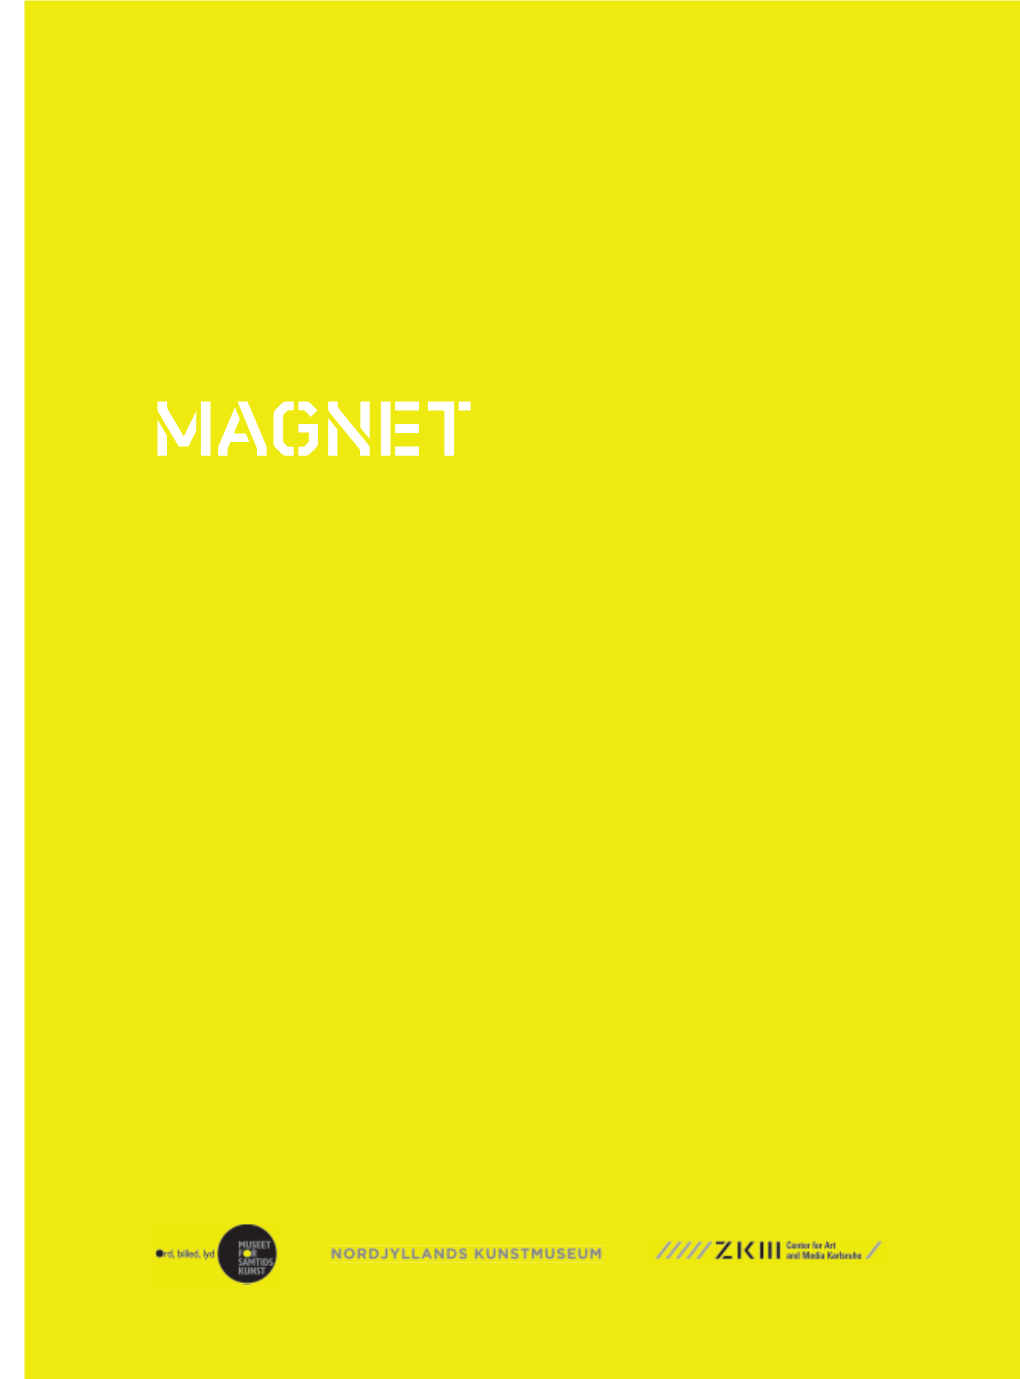 Thorbjørn Lausten's Visual Systems Magnet